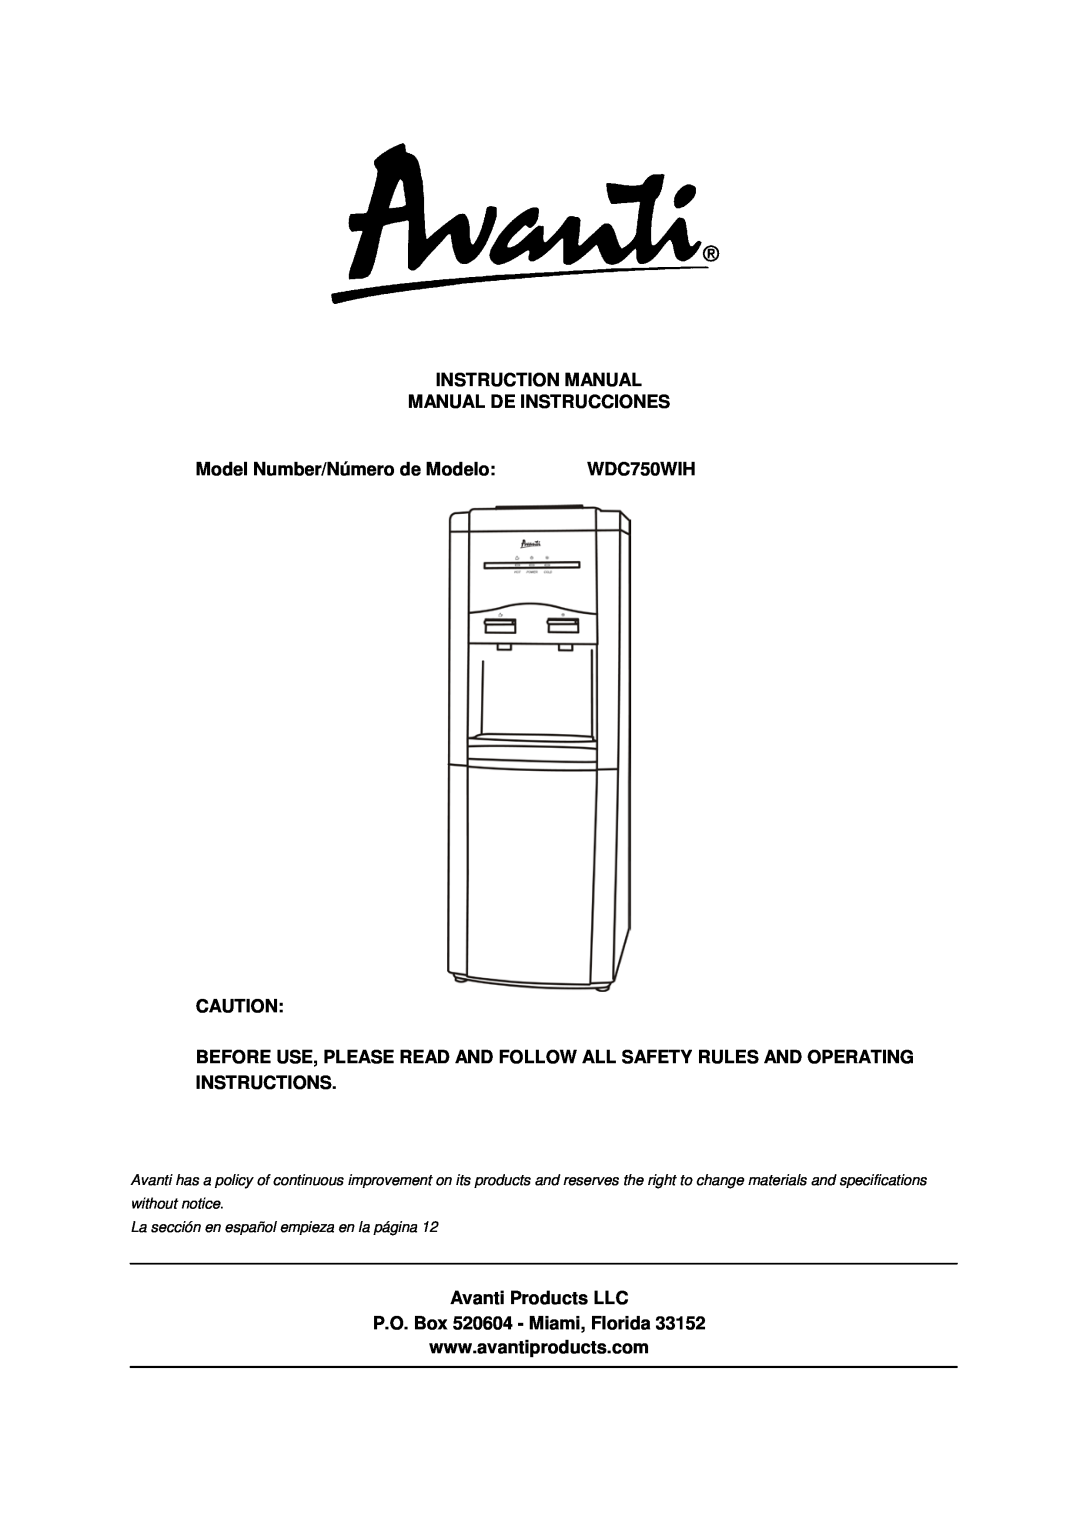 Avanti WDC750WIH instruction manual Model Number/Número de Modelo, Avanti Products LLC, P.O. Box 520604 - Miami, Florida 